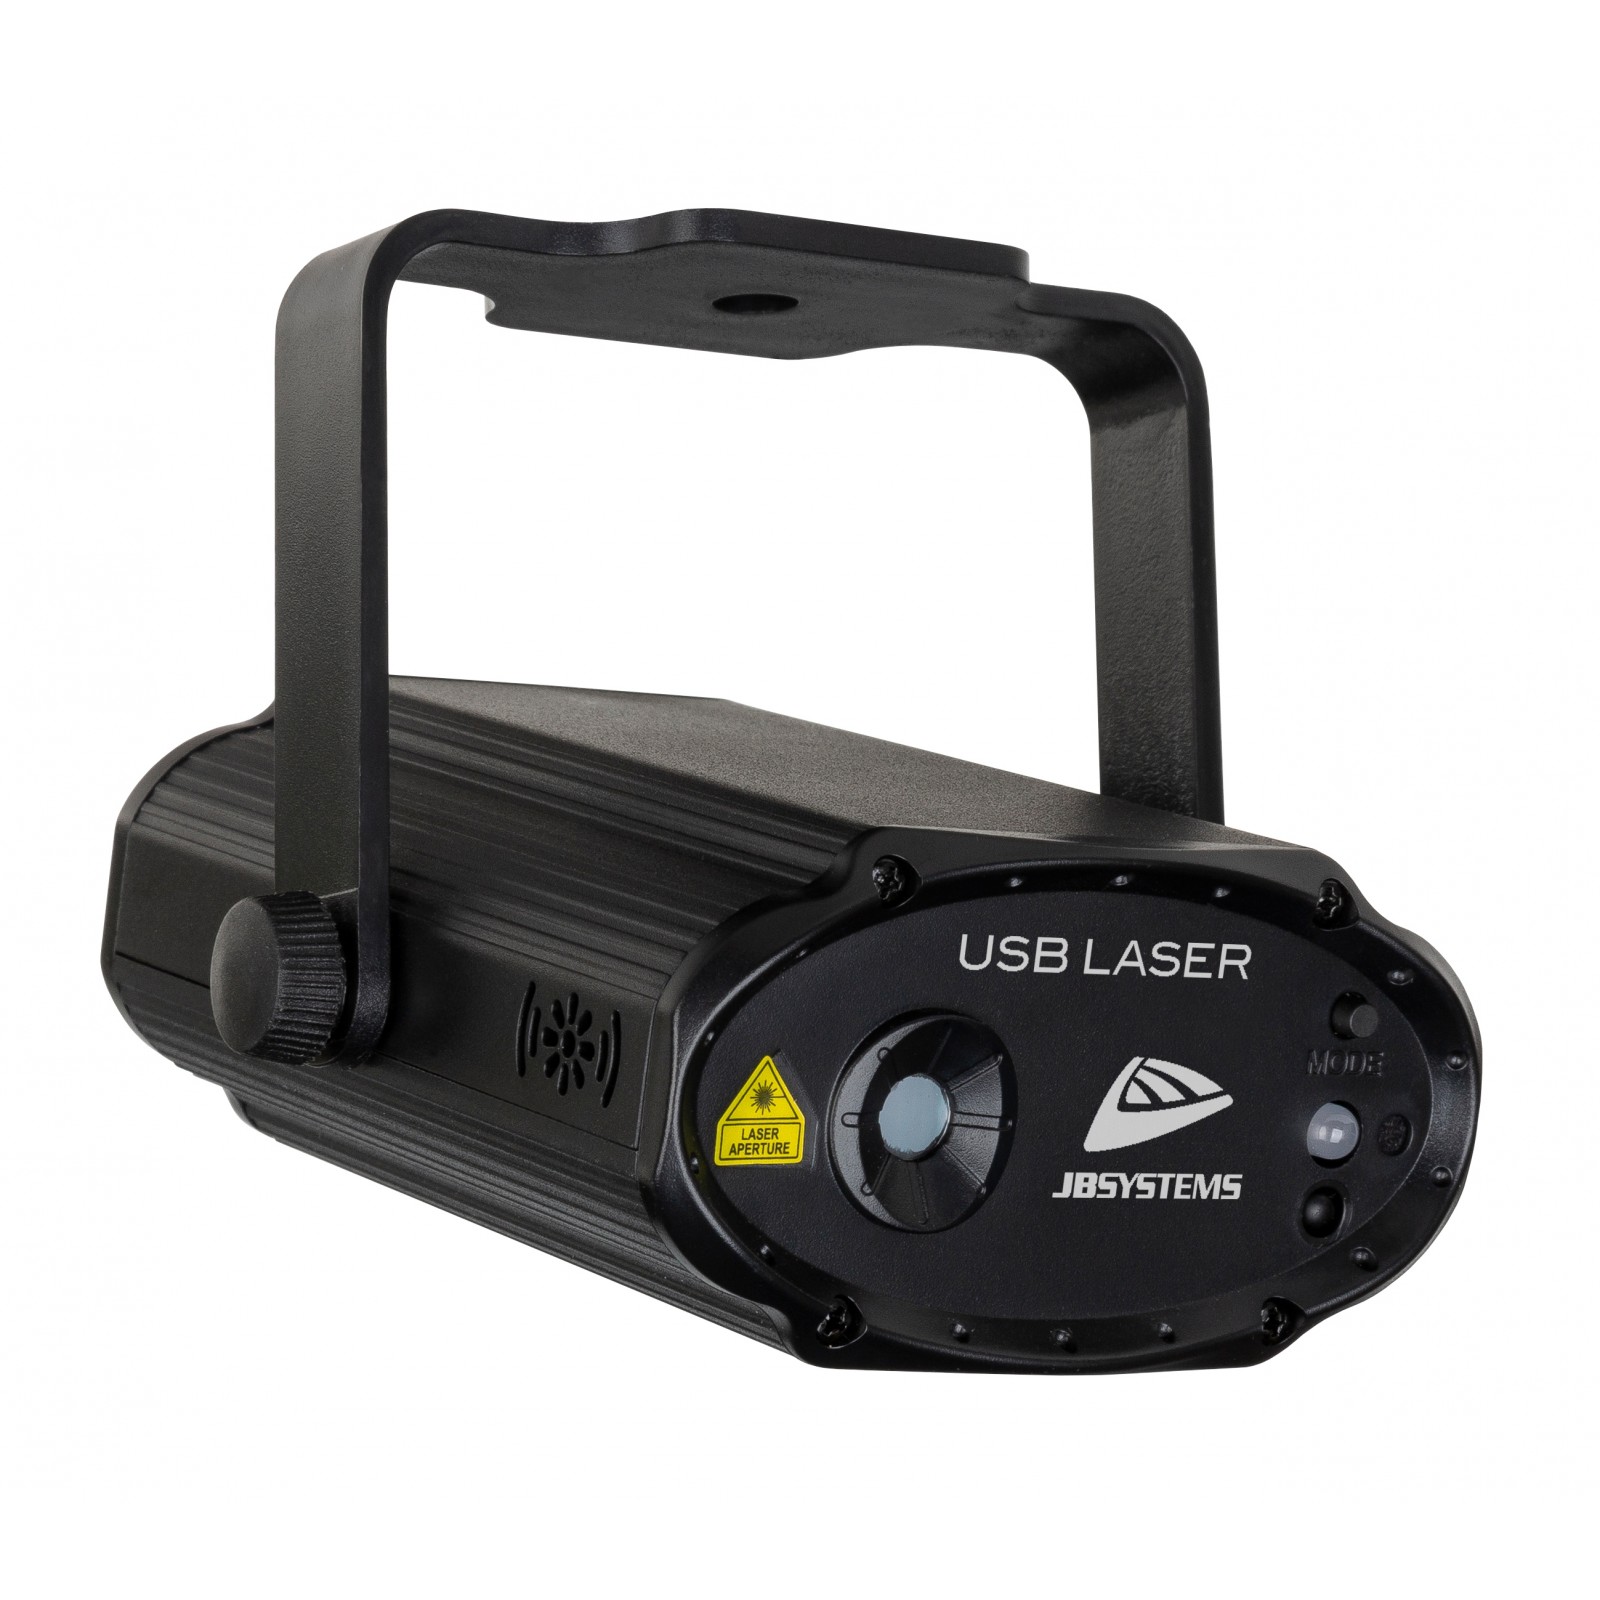 USB LASER, 5V USB lasereffect rood/groen,zwart